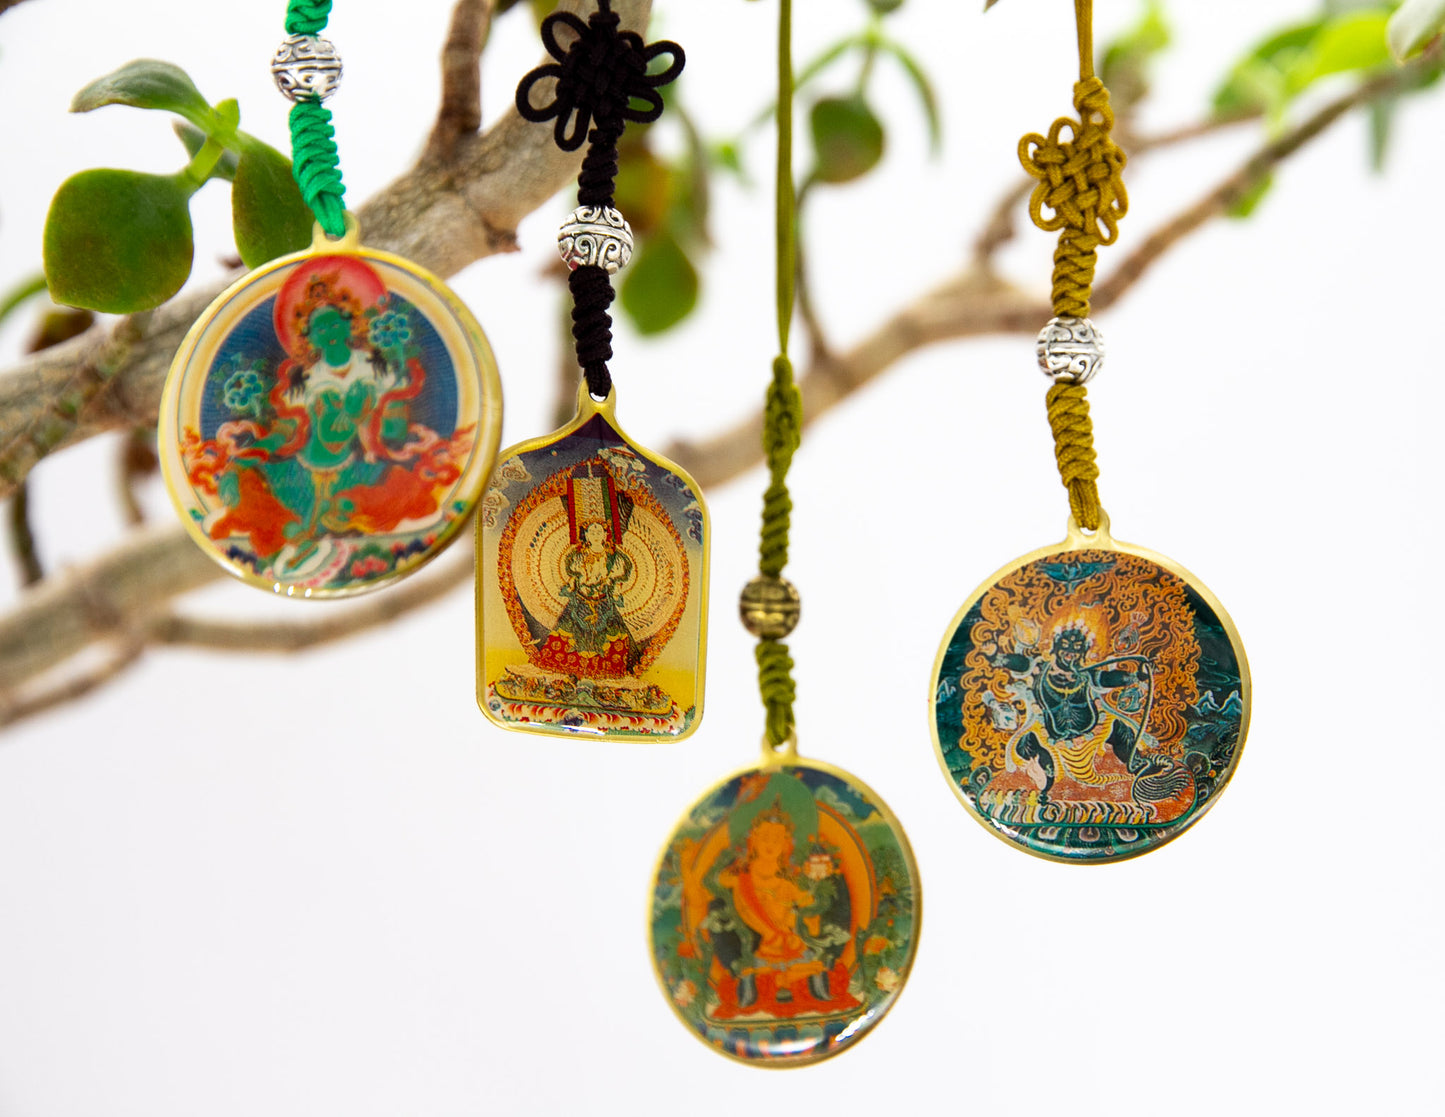 Colourful Deity Pendants